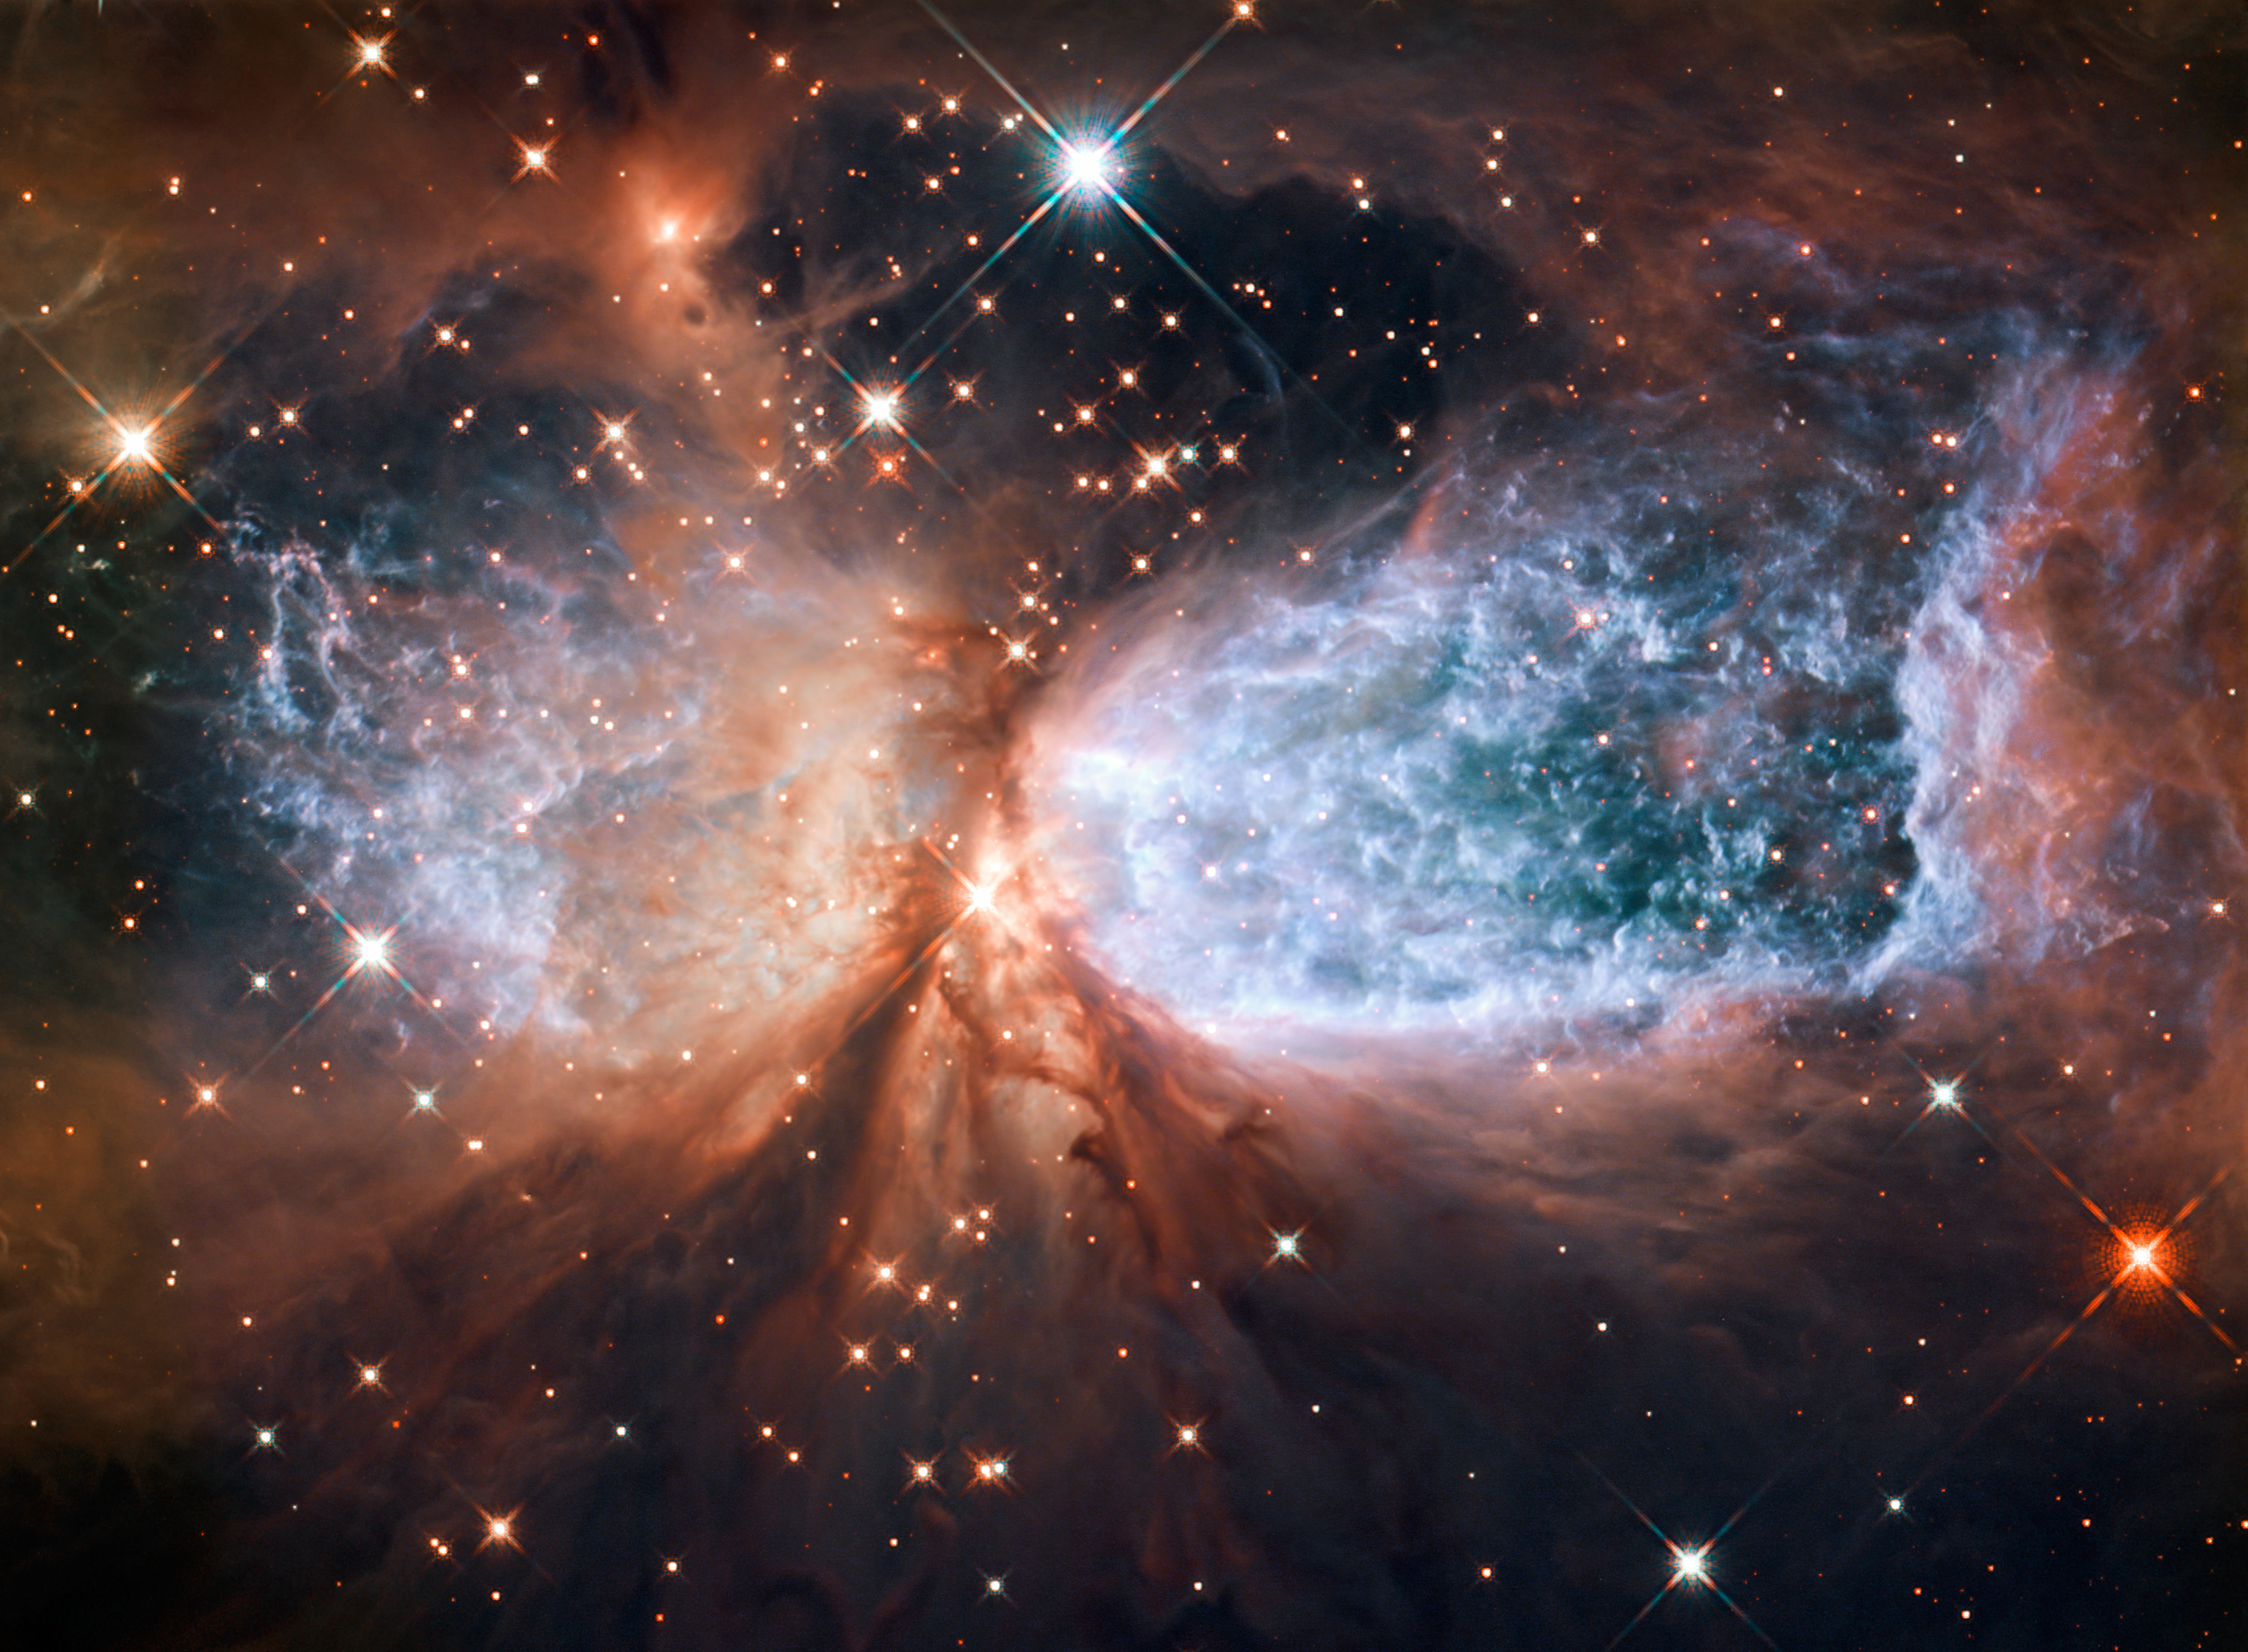 Hubble star-forming region S106